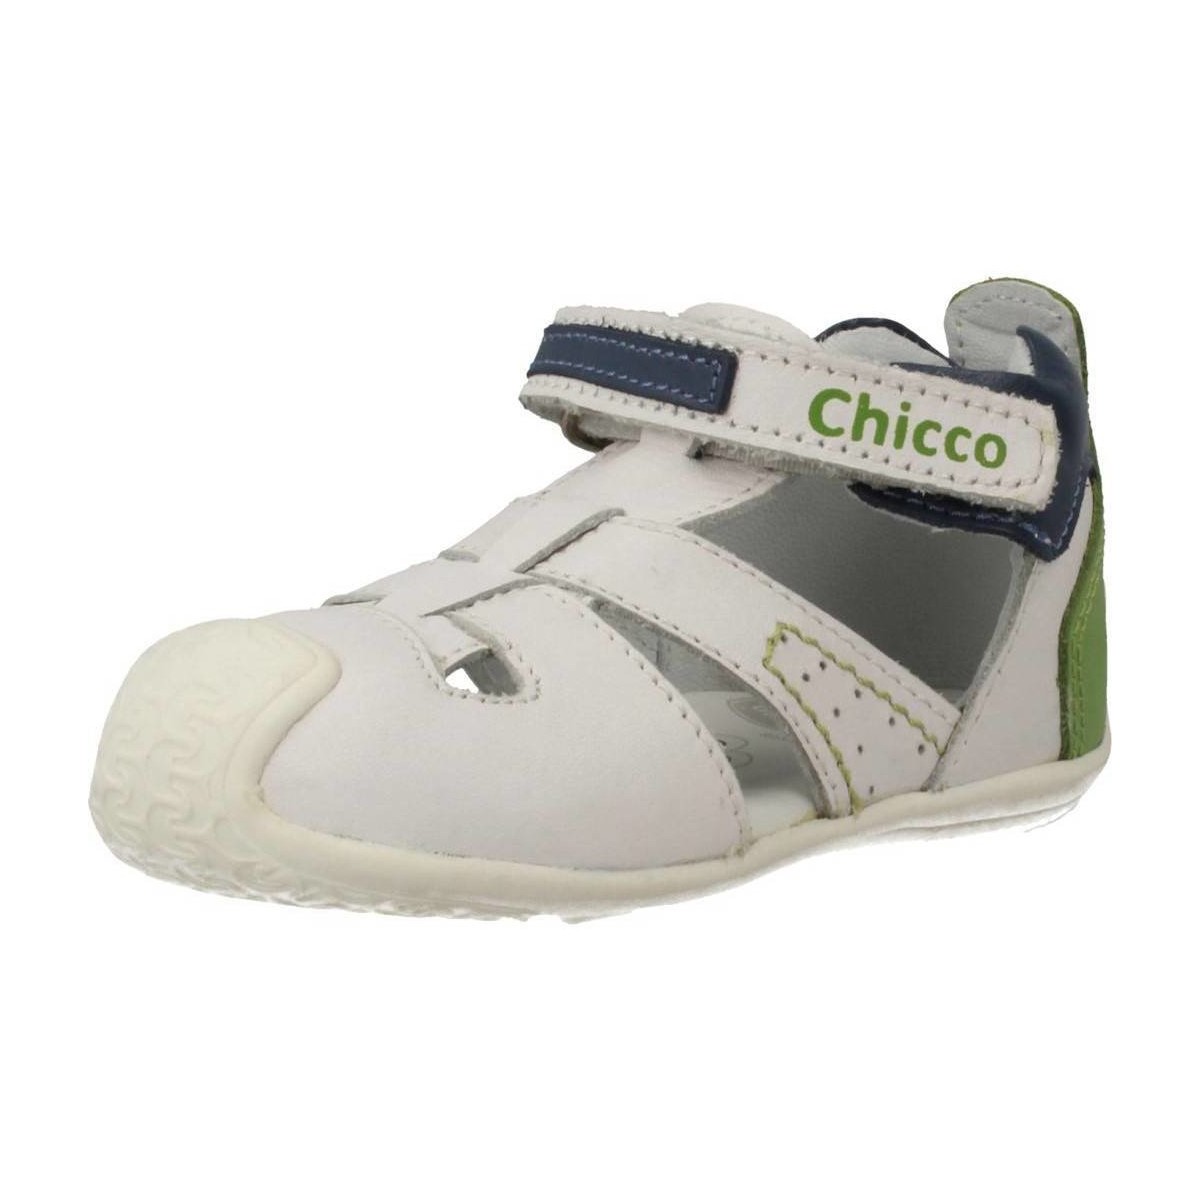 Boty Chlapecké Sandály Chicco 68405 Bílá